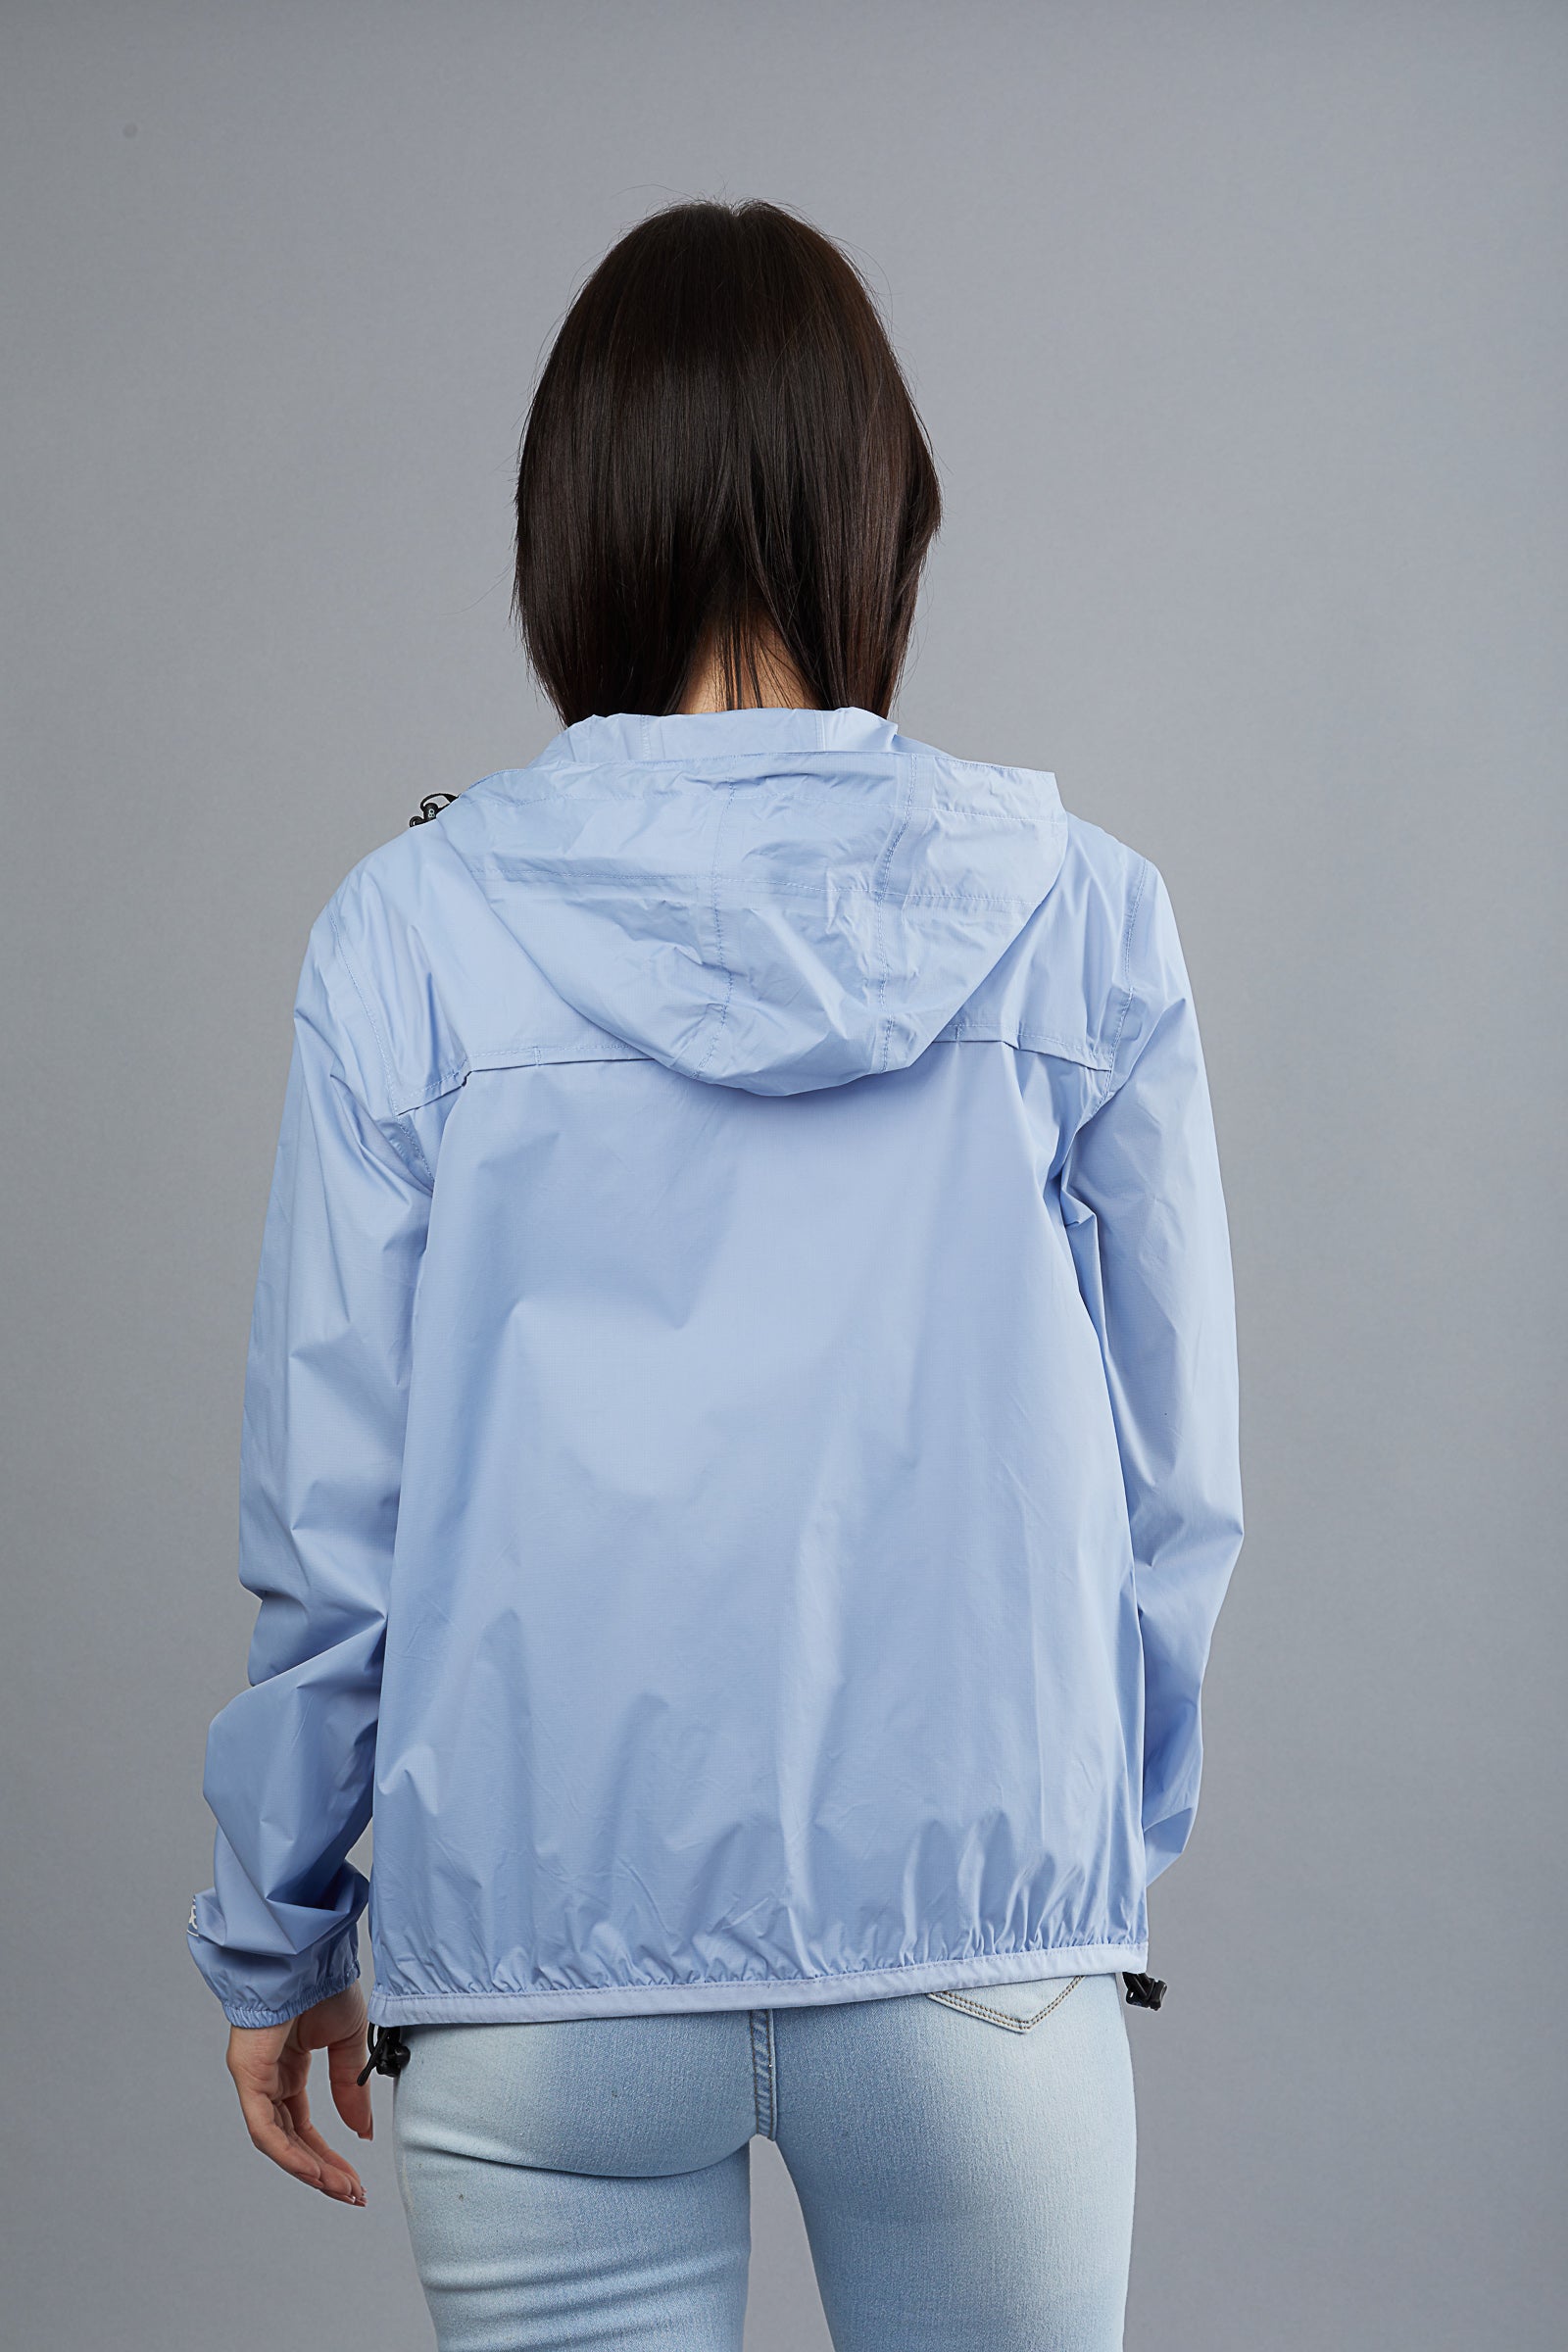 Powder blue full zip packable rain jacket and windbreaker